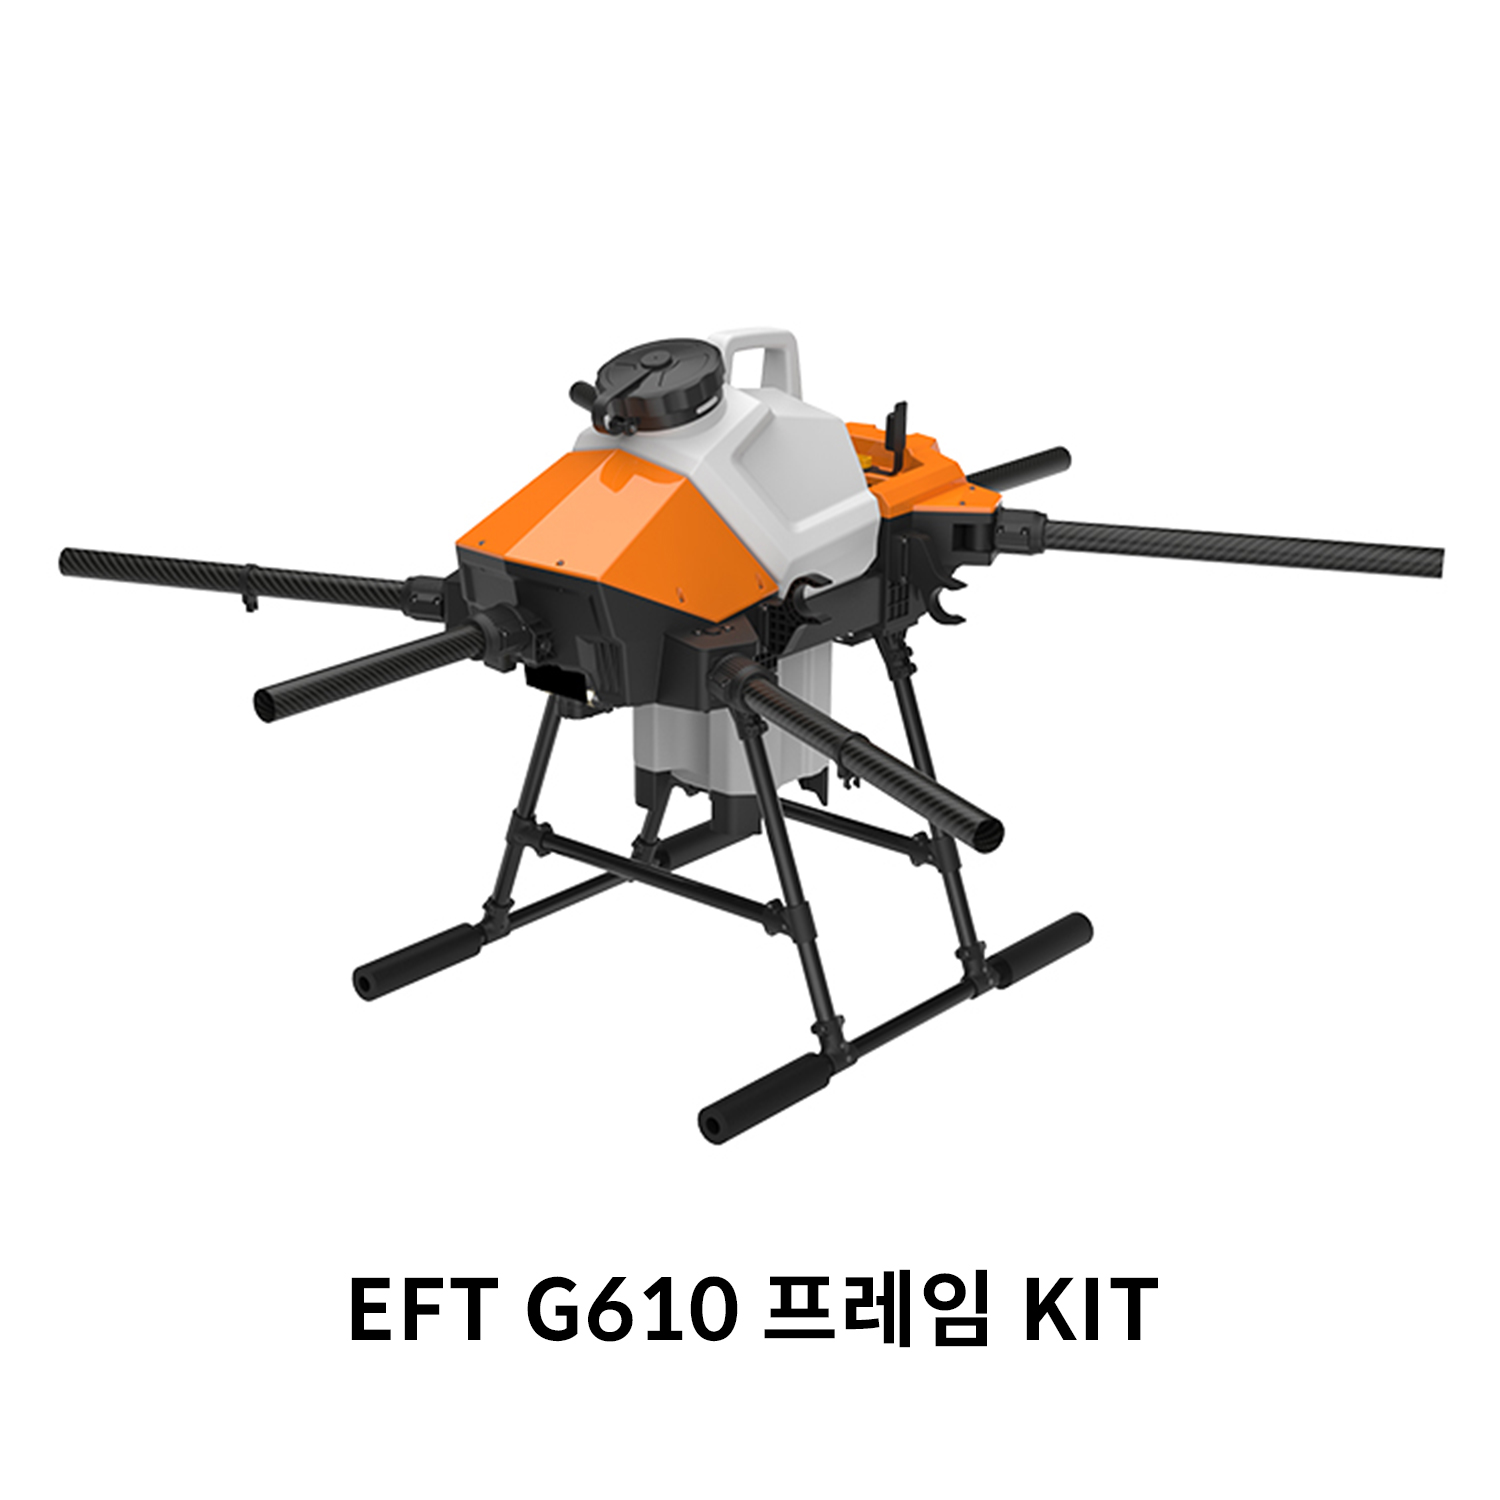 EFT G610 프레임 KIT 농업 방제 드론 헬셀